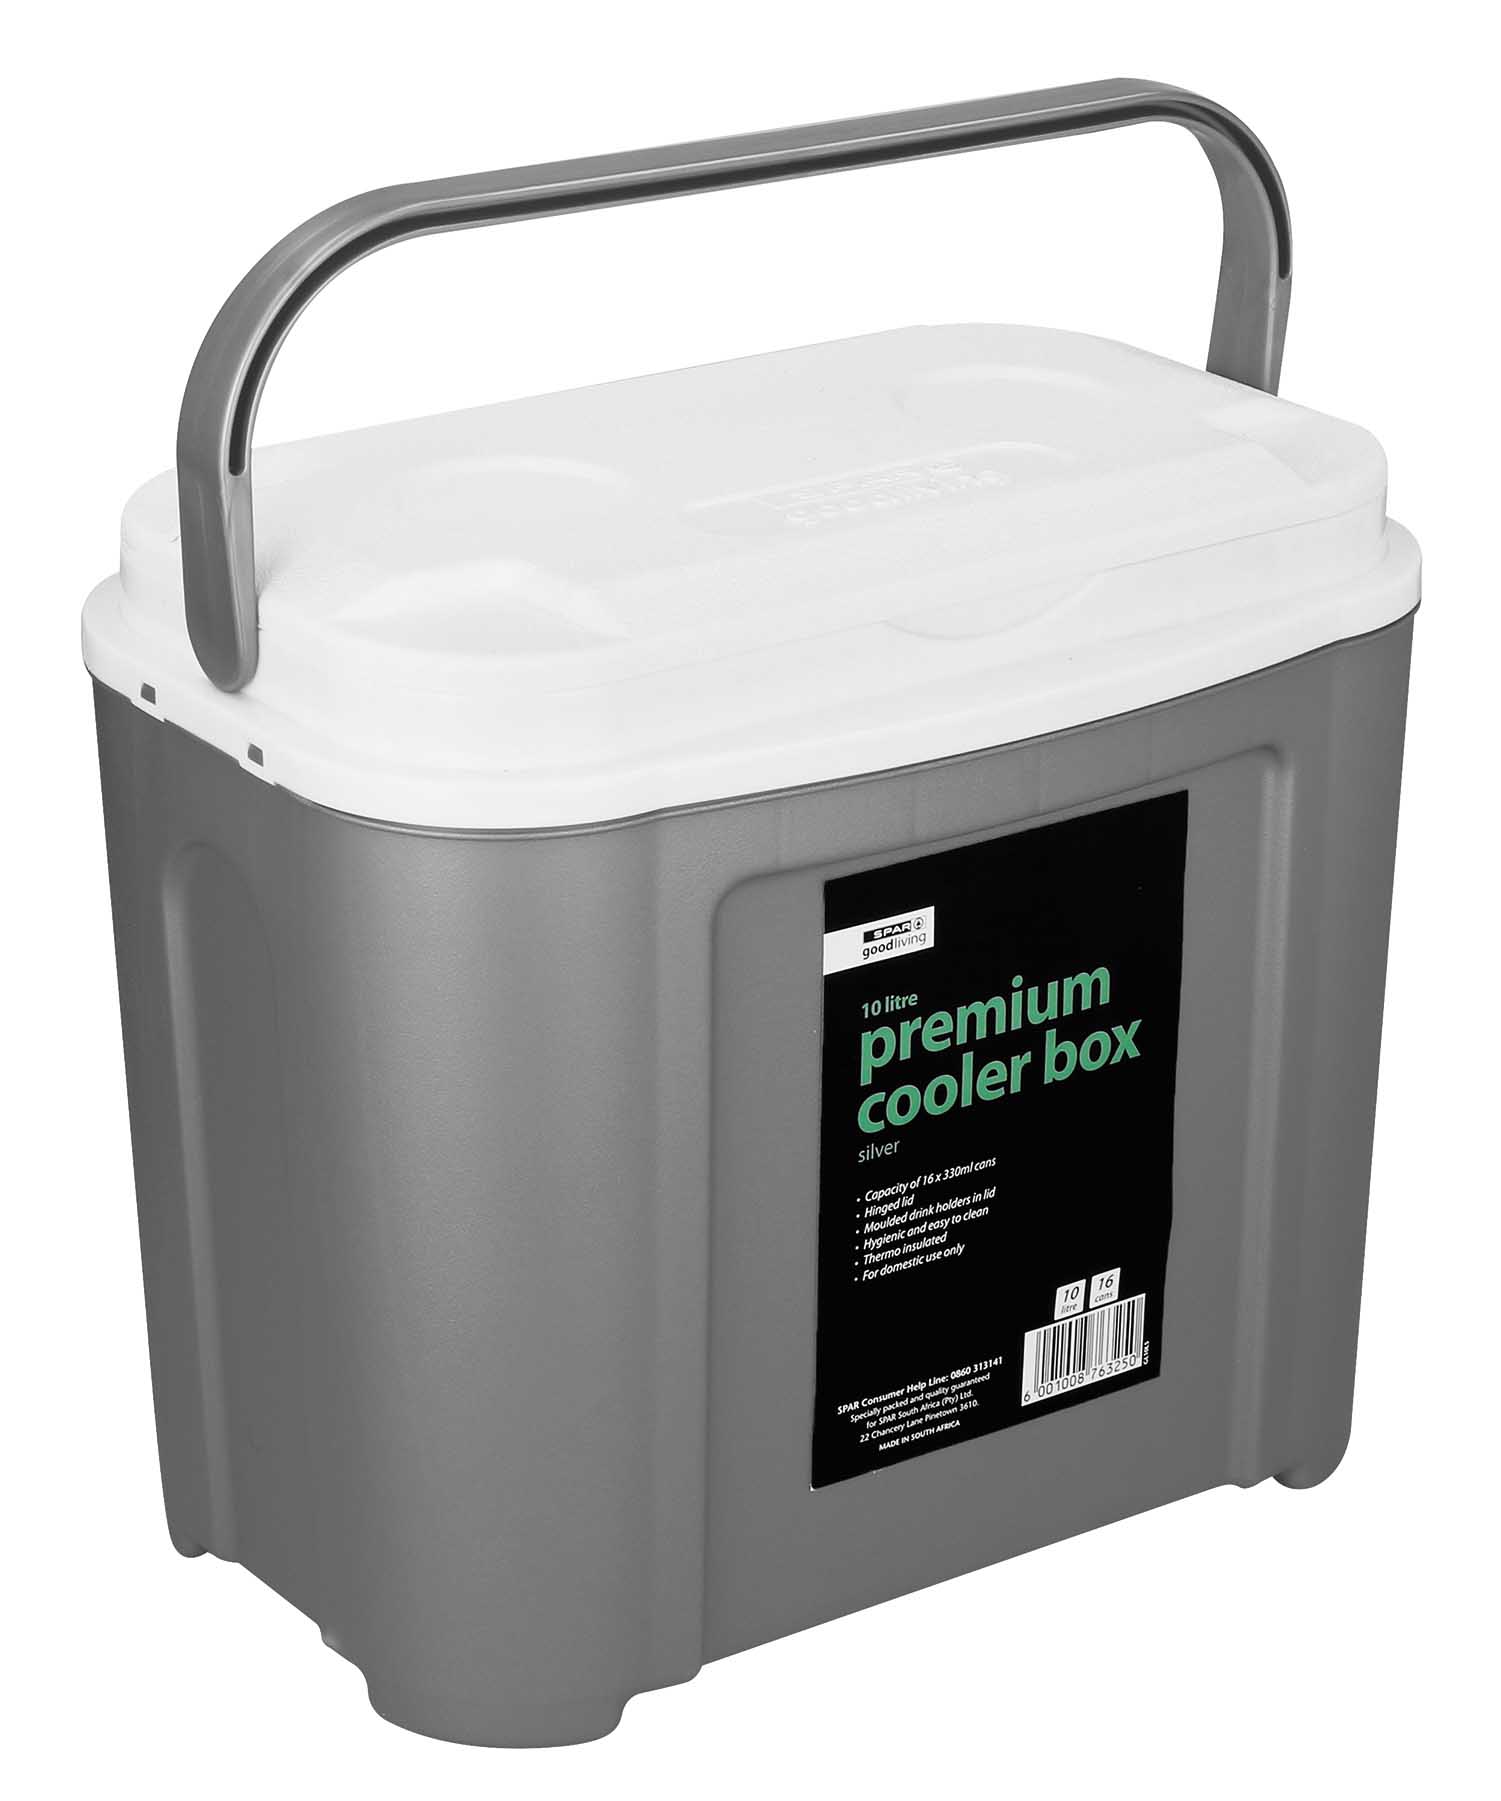 premium cooler box 10 litre (silver)